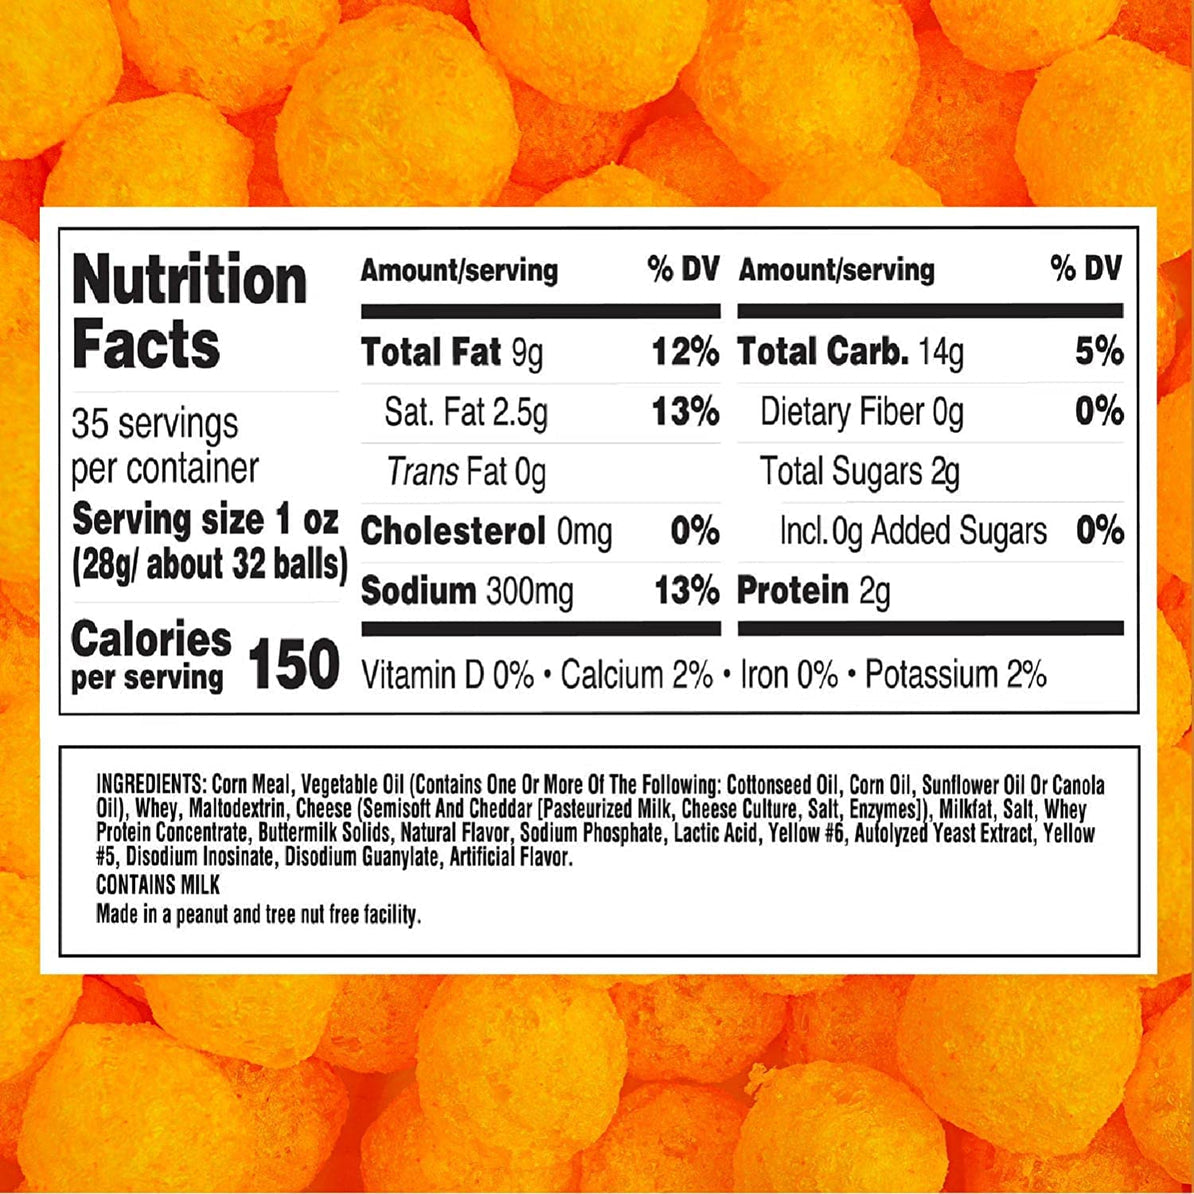 Utz Cheese Balls Cheddar 36.5 oz. Barrel 2 Pack – Utz Quality Foods